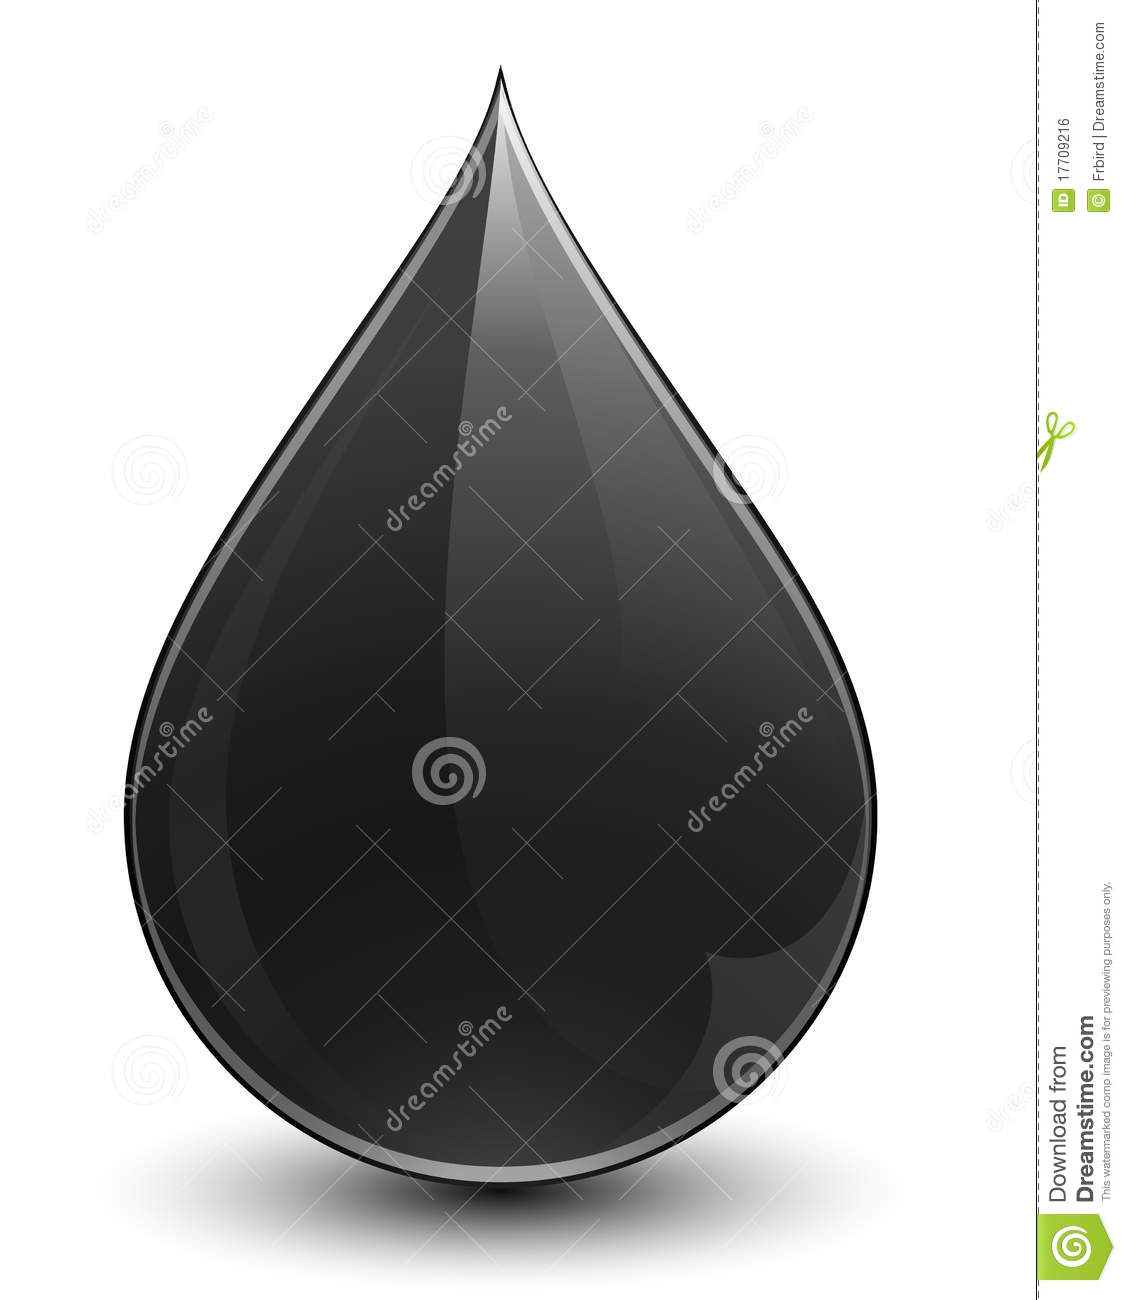 Crude Oil Royalty Free Stock Image   Image  17709216